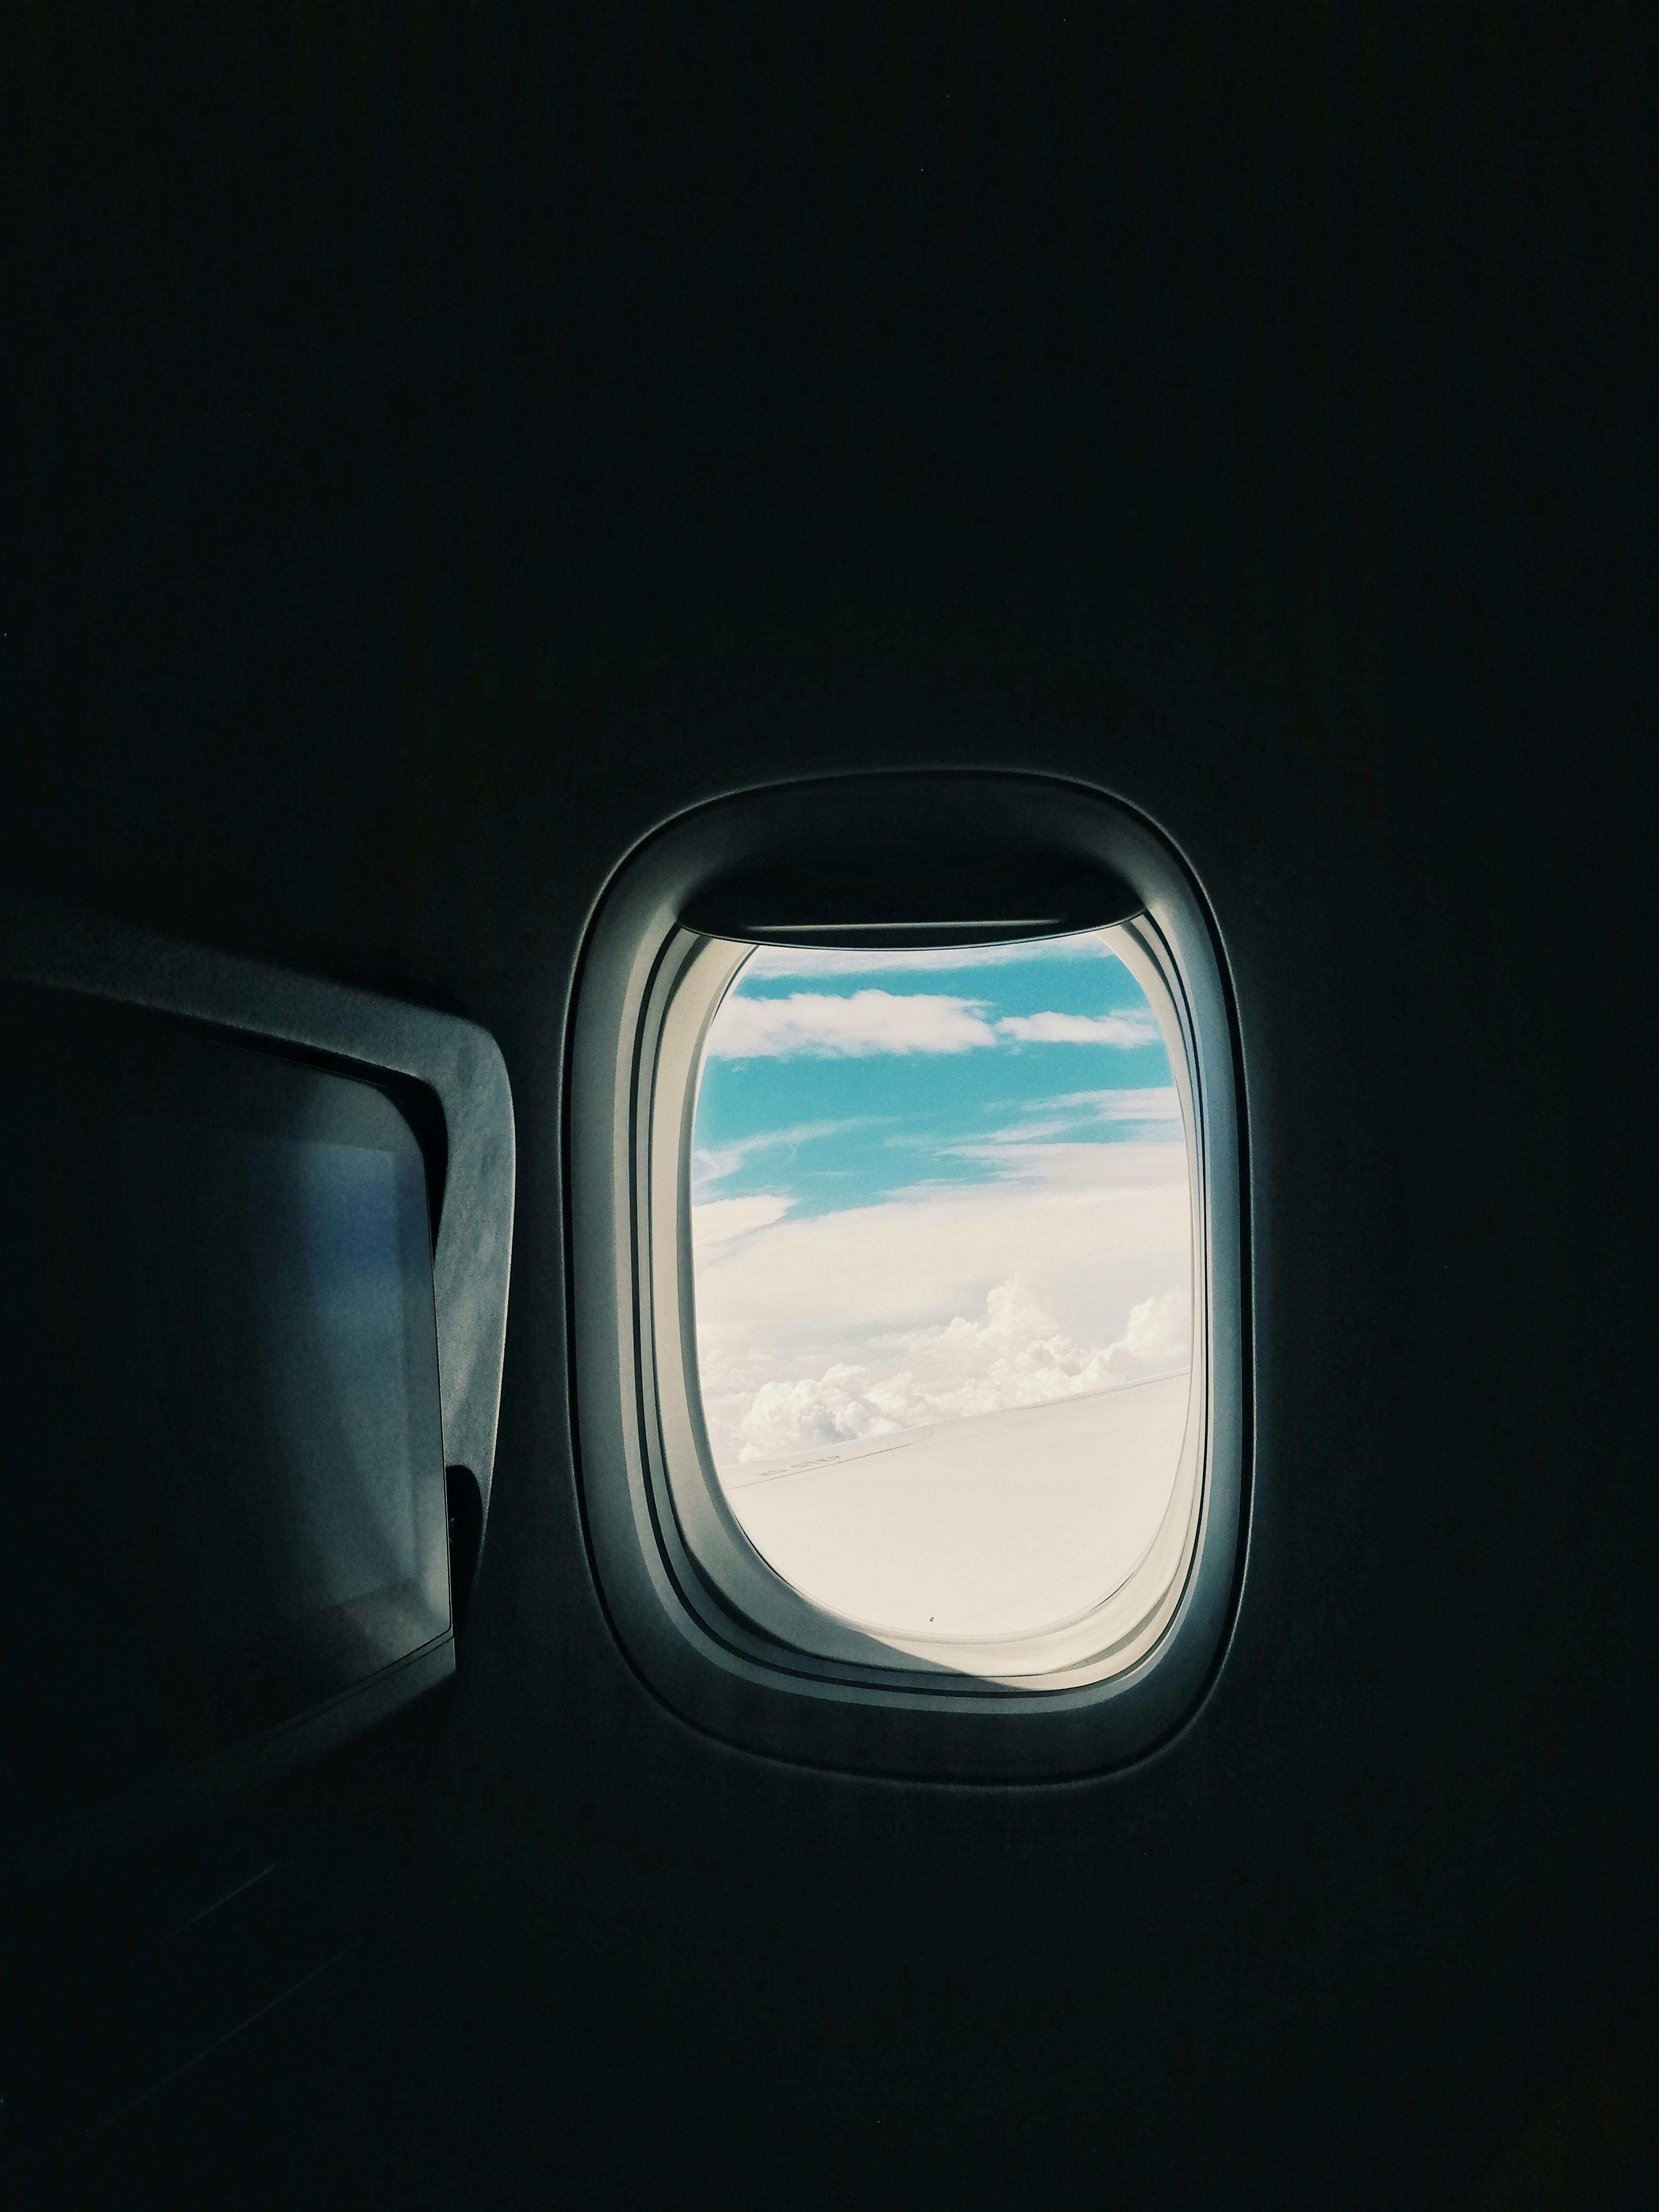 Airplane Window · Free Stock Photo